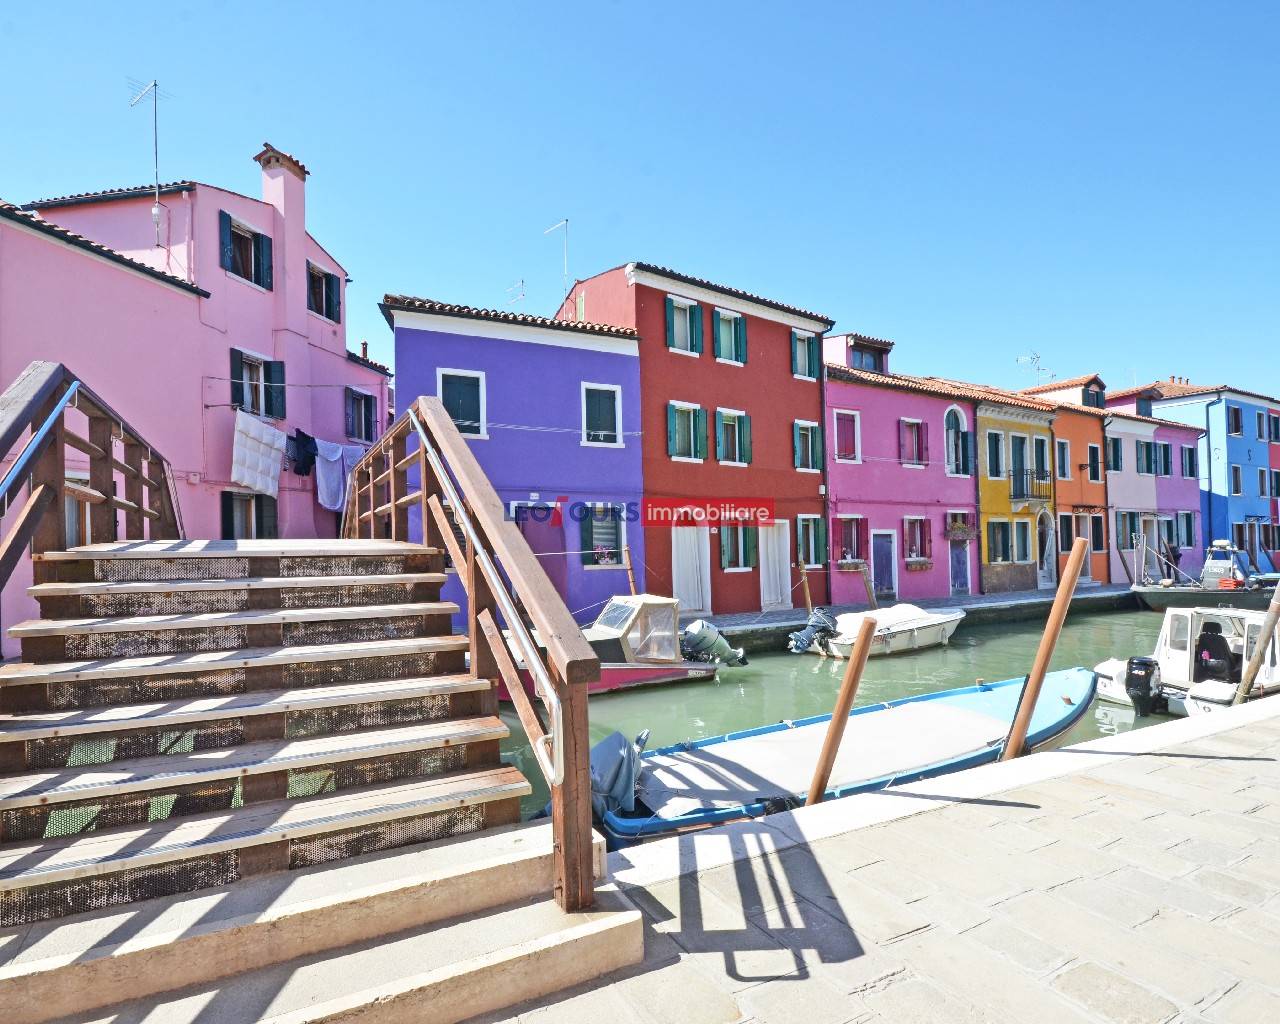 Splendid, completely renovated terraced house in Burano, Venice